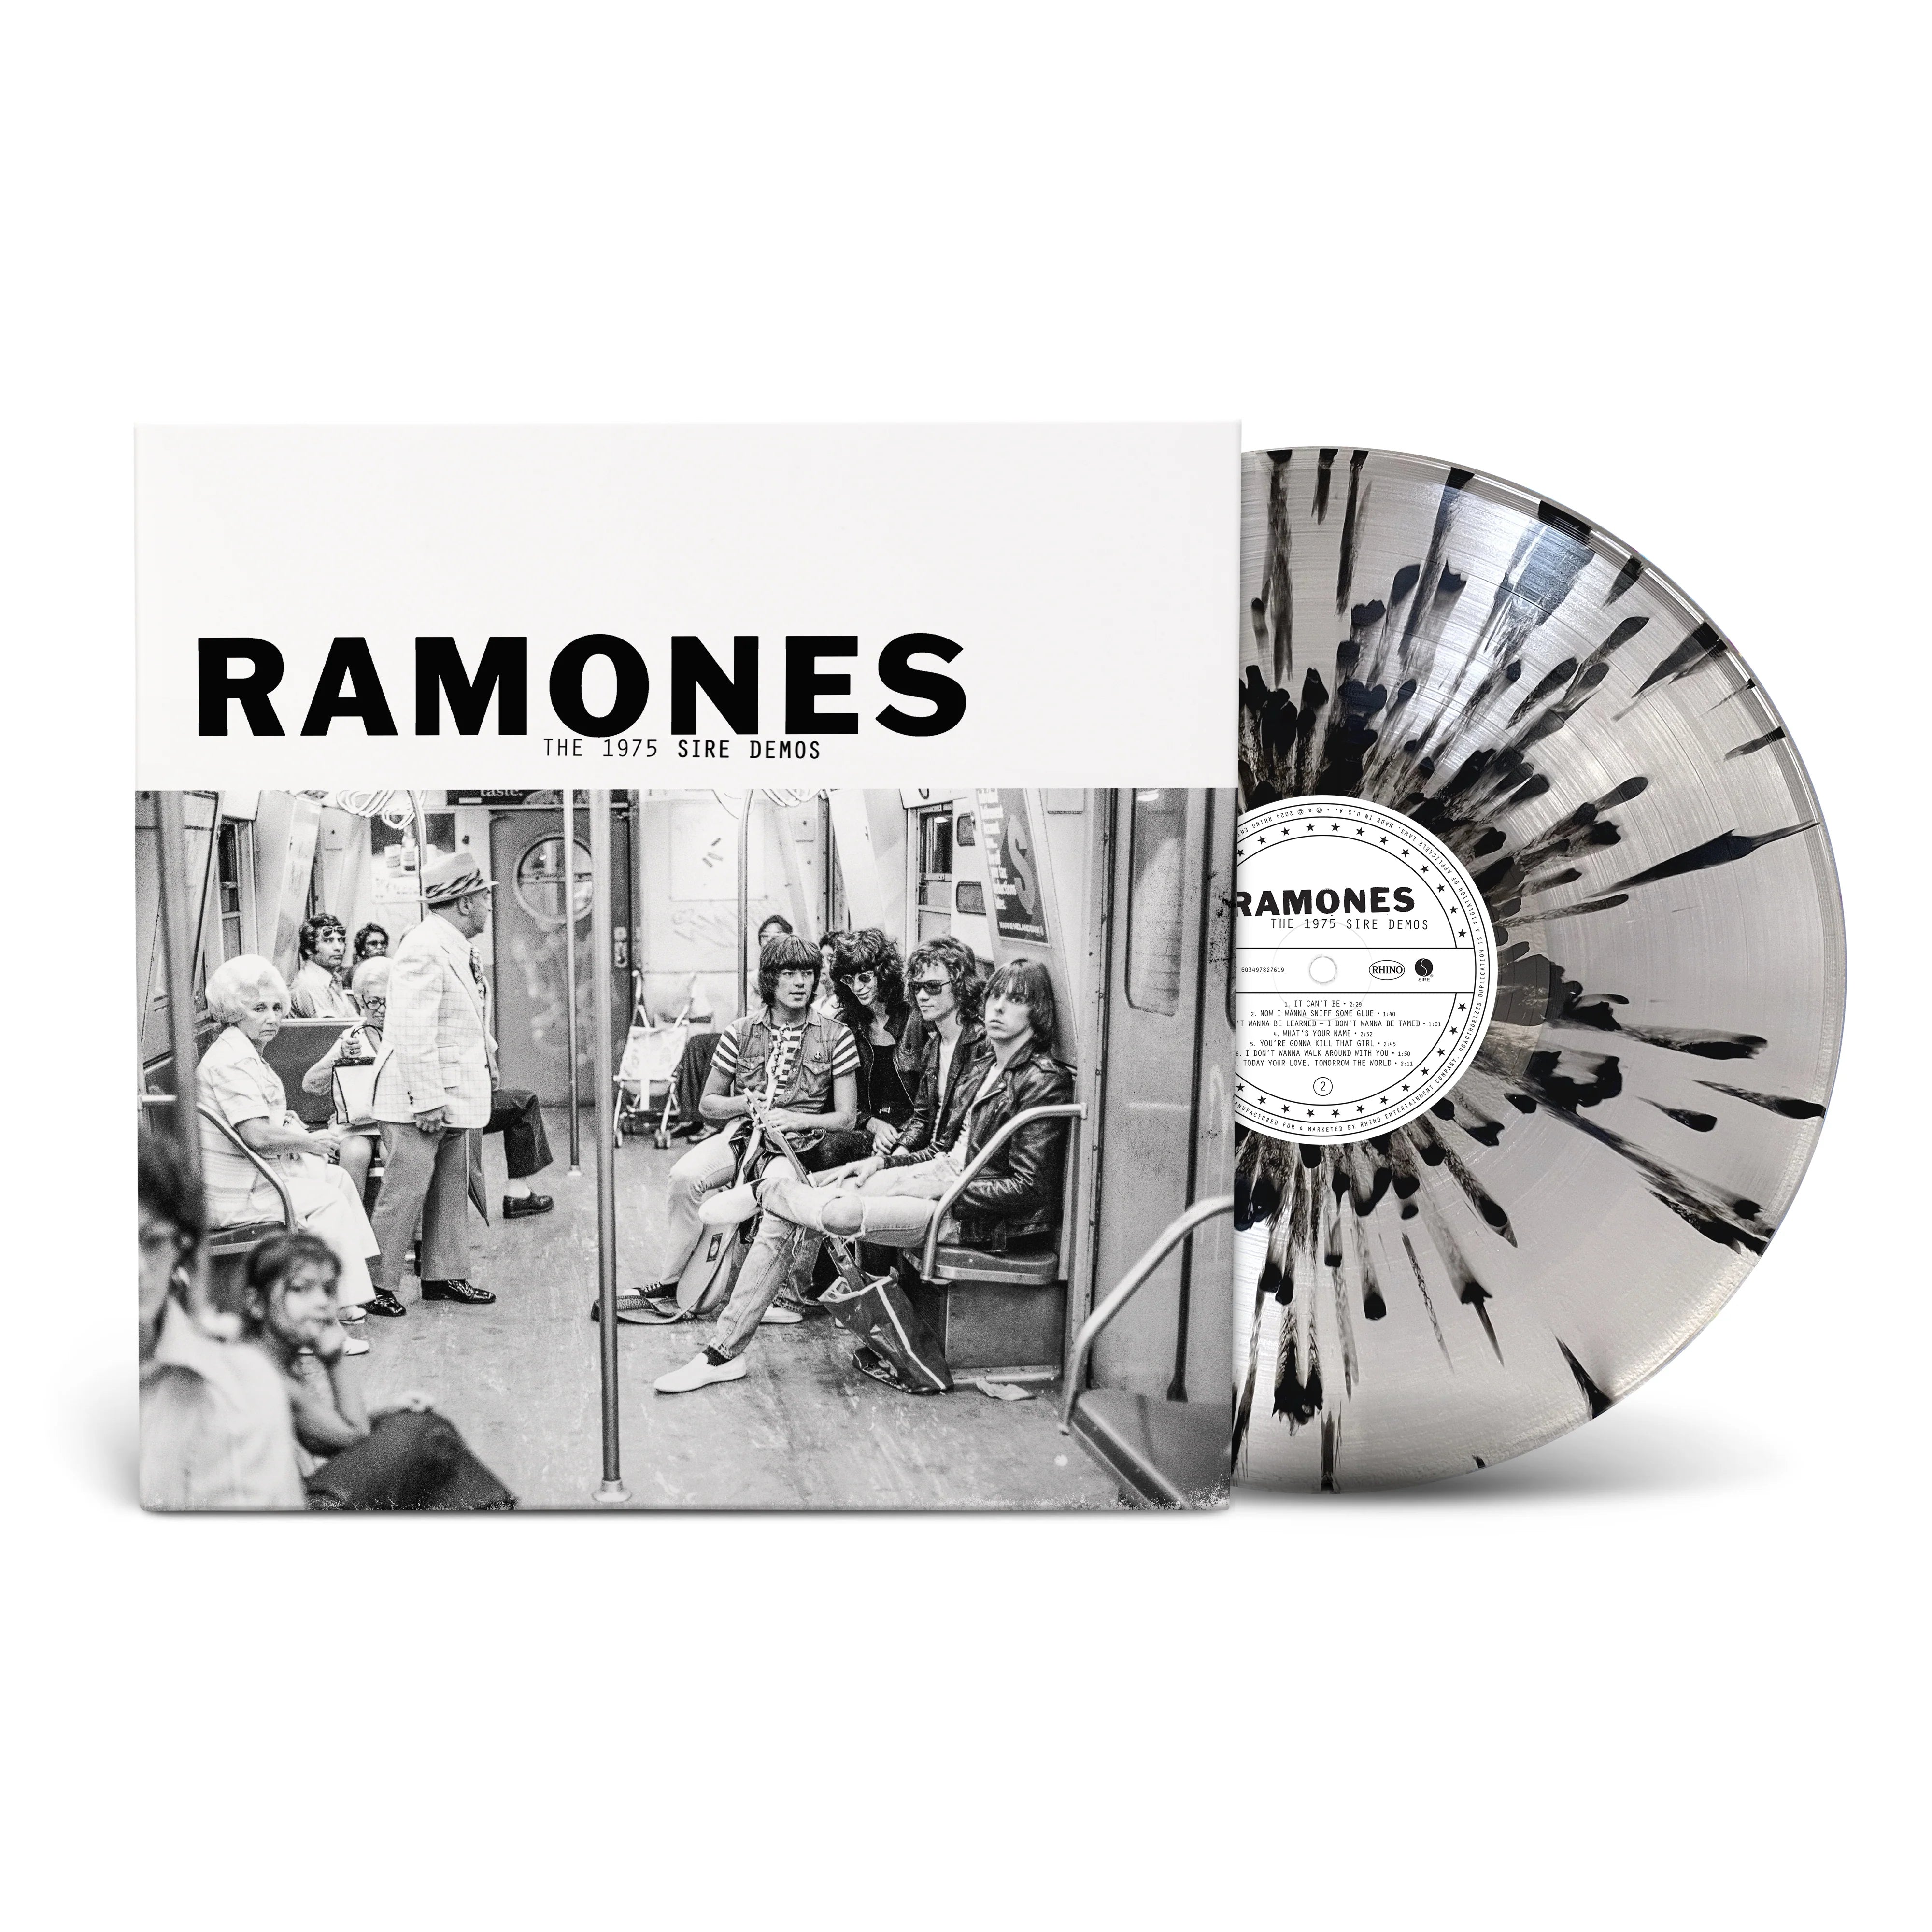 RSD RAMONES - The 1975 Sire Demos (Demos) - 1 LP - 140g Clear with Black Splatter Vinyl [RSD 2024]